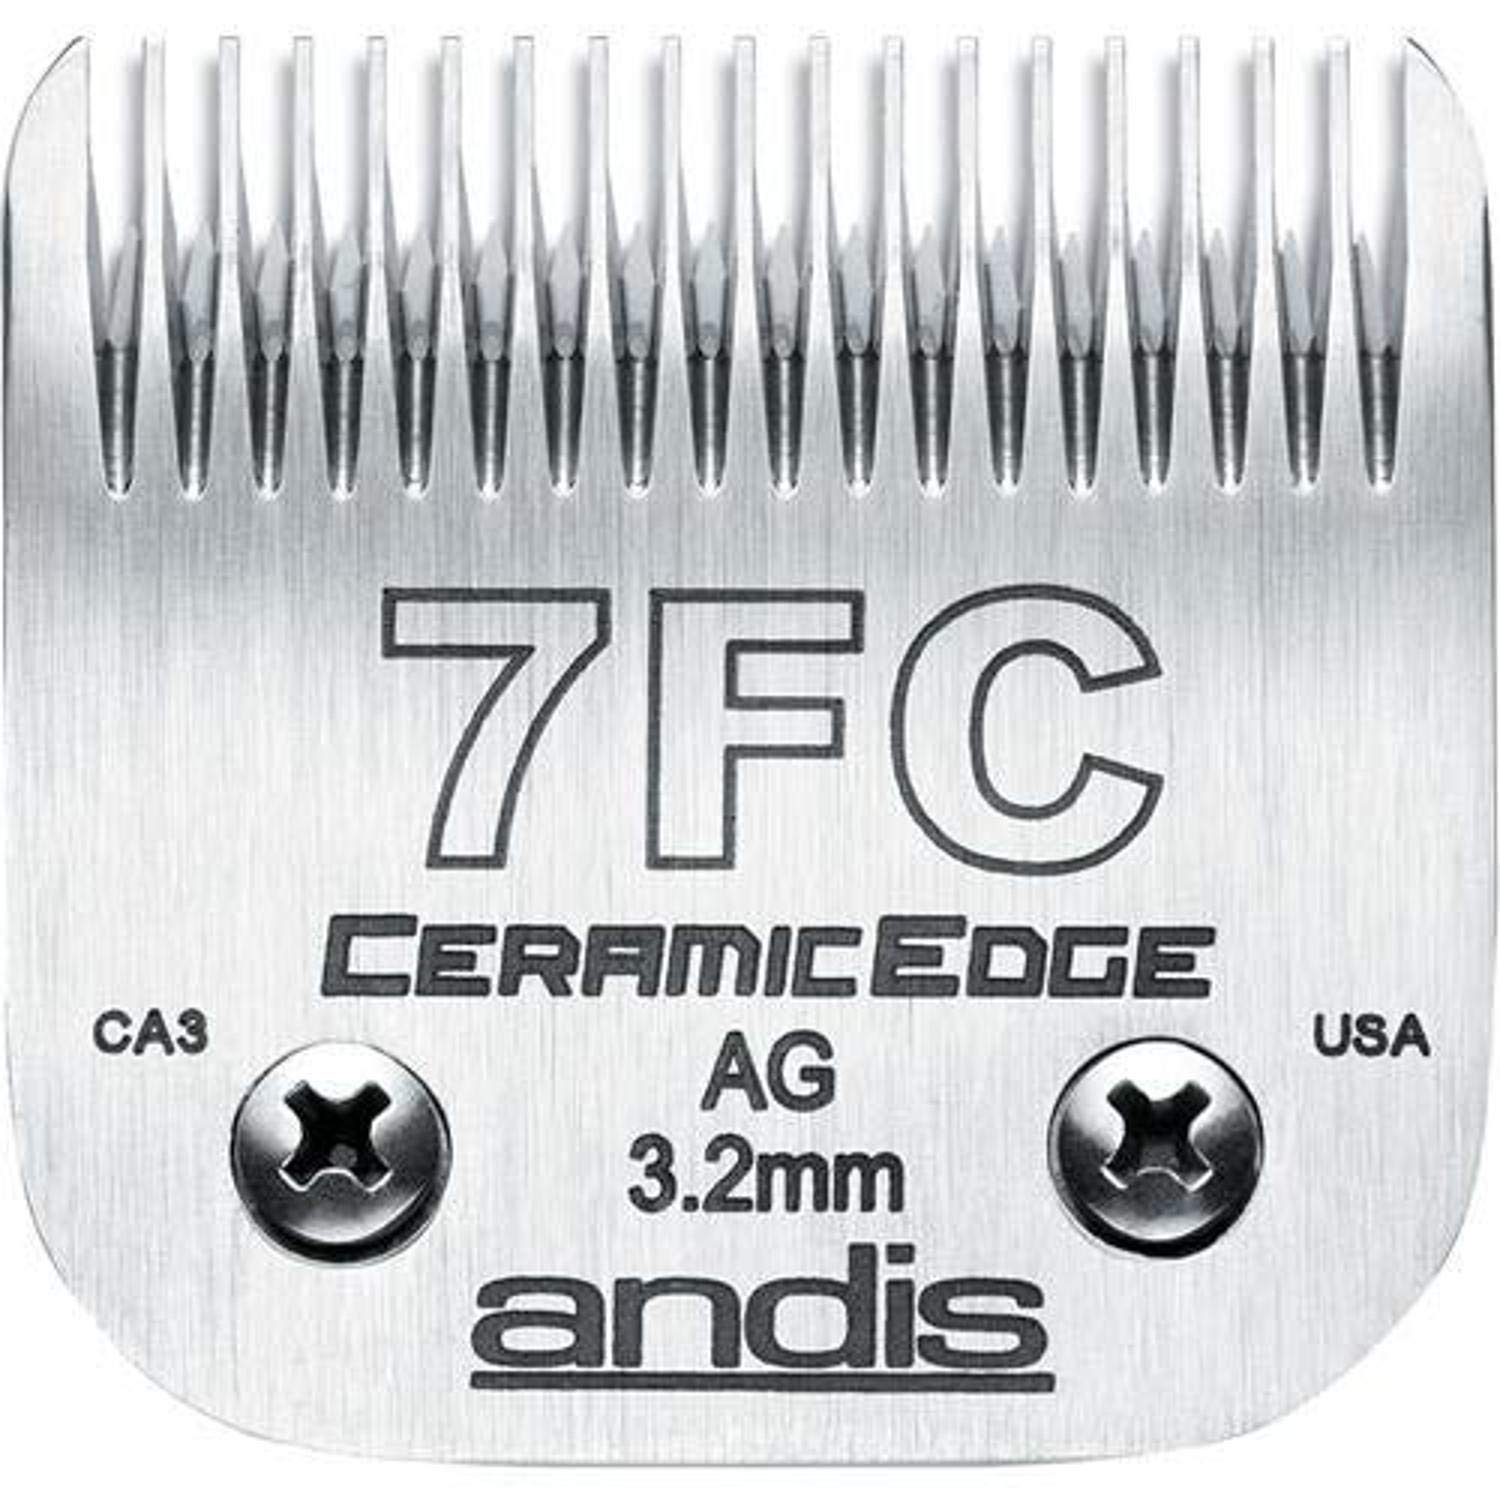 Andis CeramicEdge® Detachable Blade, Size 7FC/3.2mm